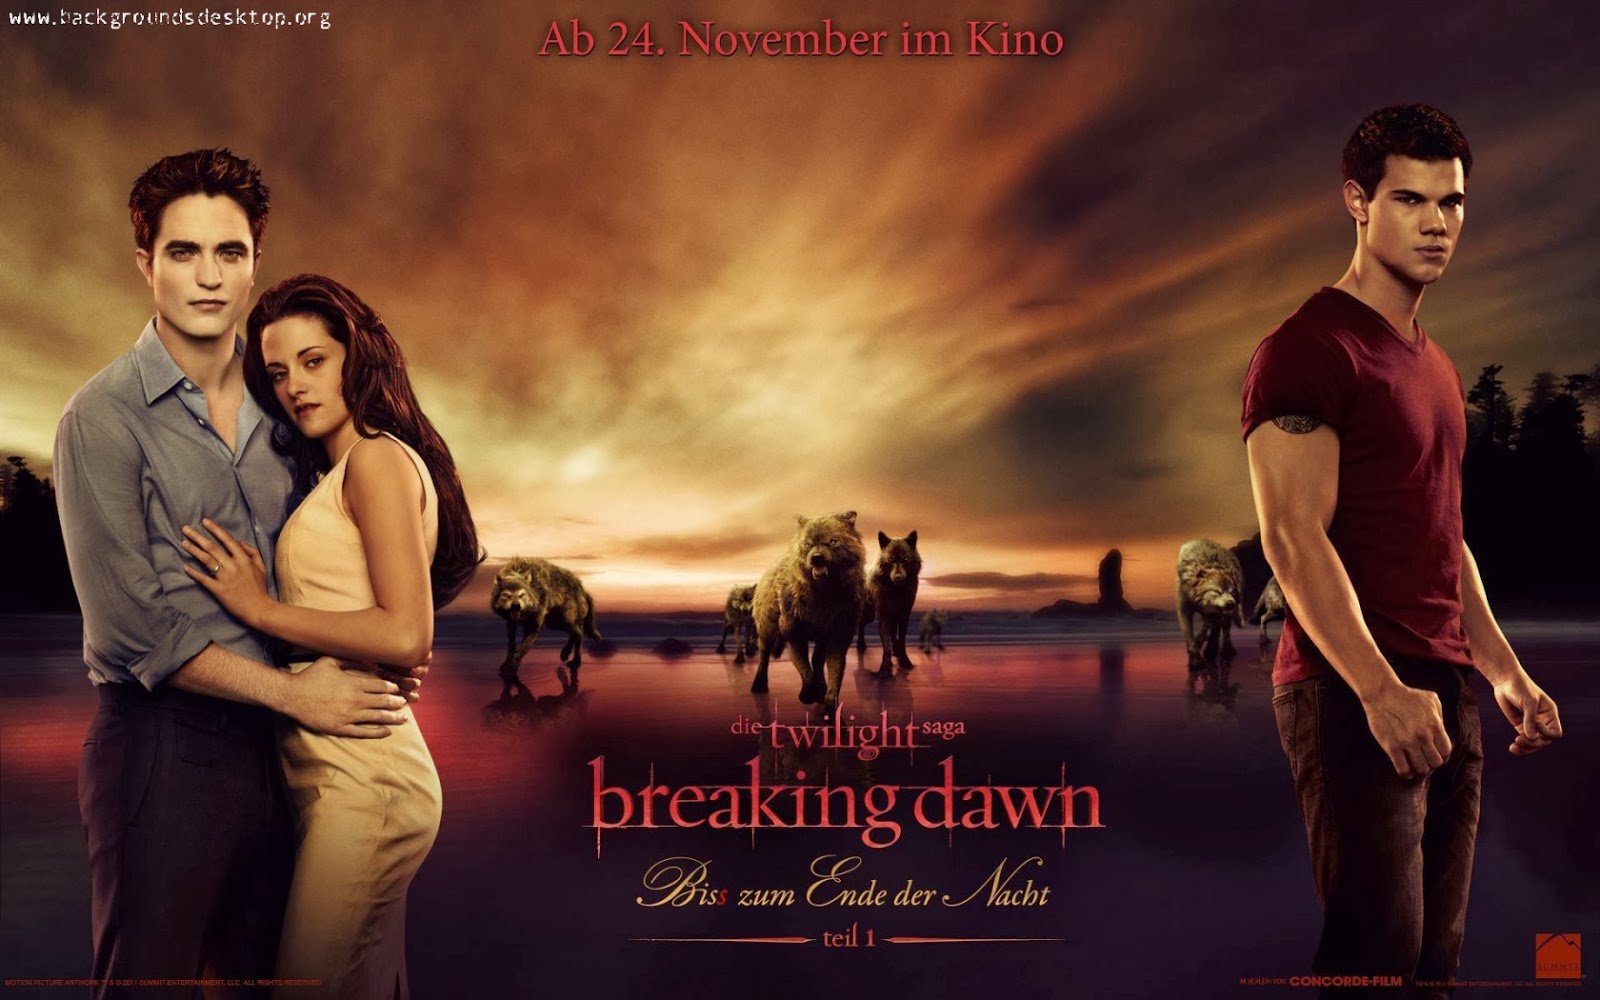 The Twilight Saga: Breaking Dawn - Part 1 wallpapers ...